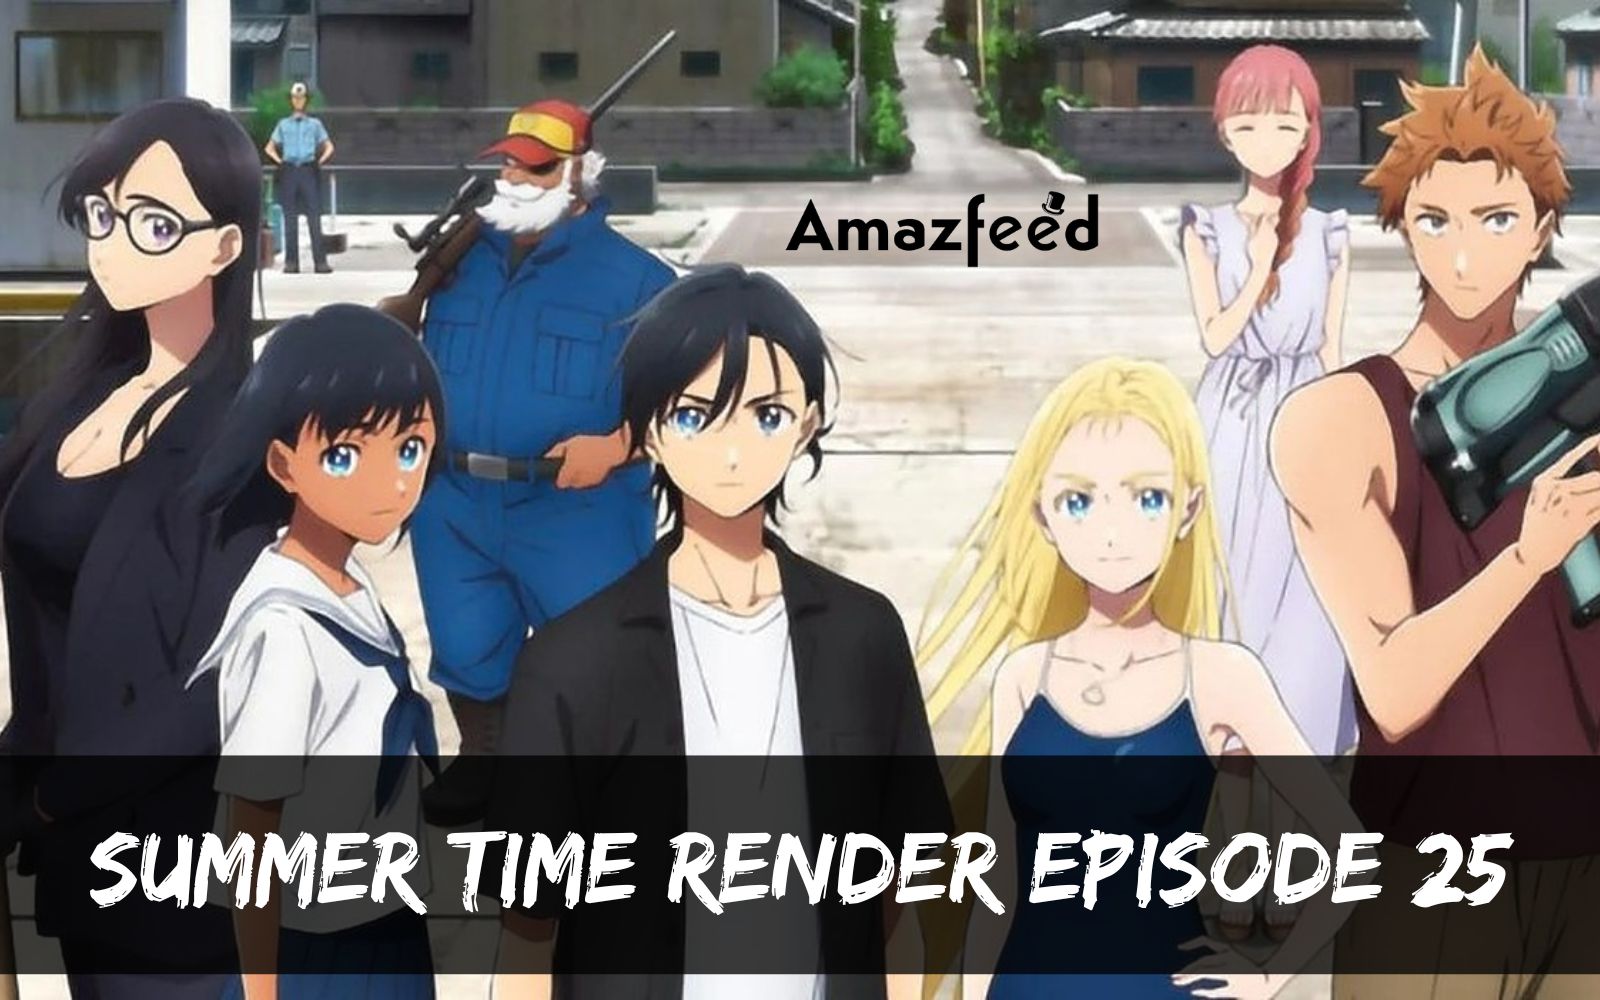 Summertime Render Episode 25 : Countdown, Release Date, Recap, Cast, Spoiler & Where to Watch